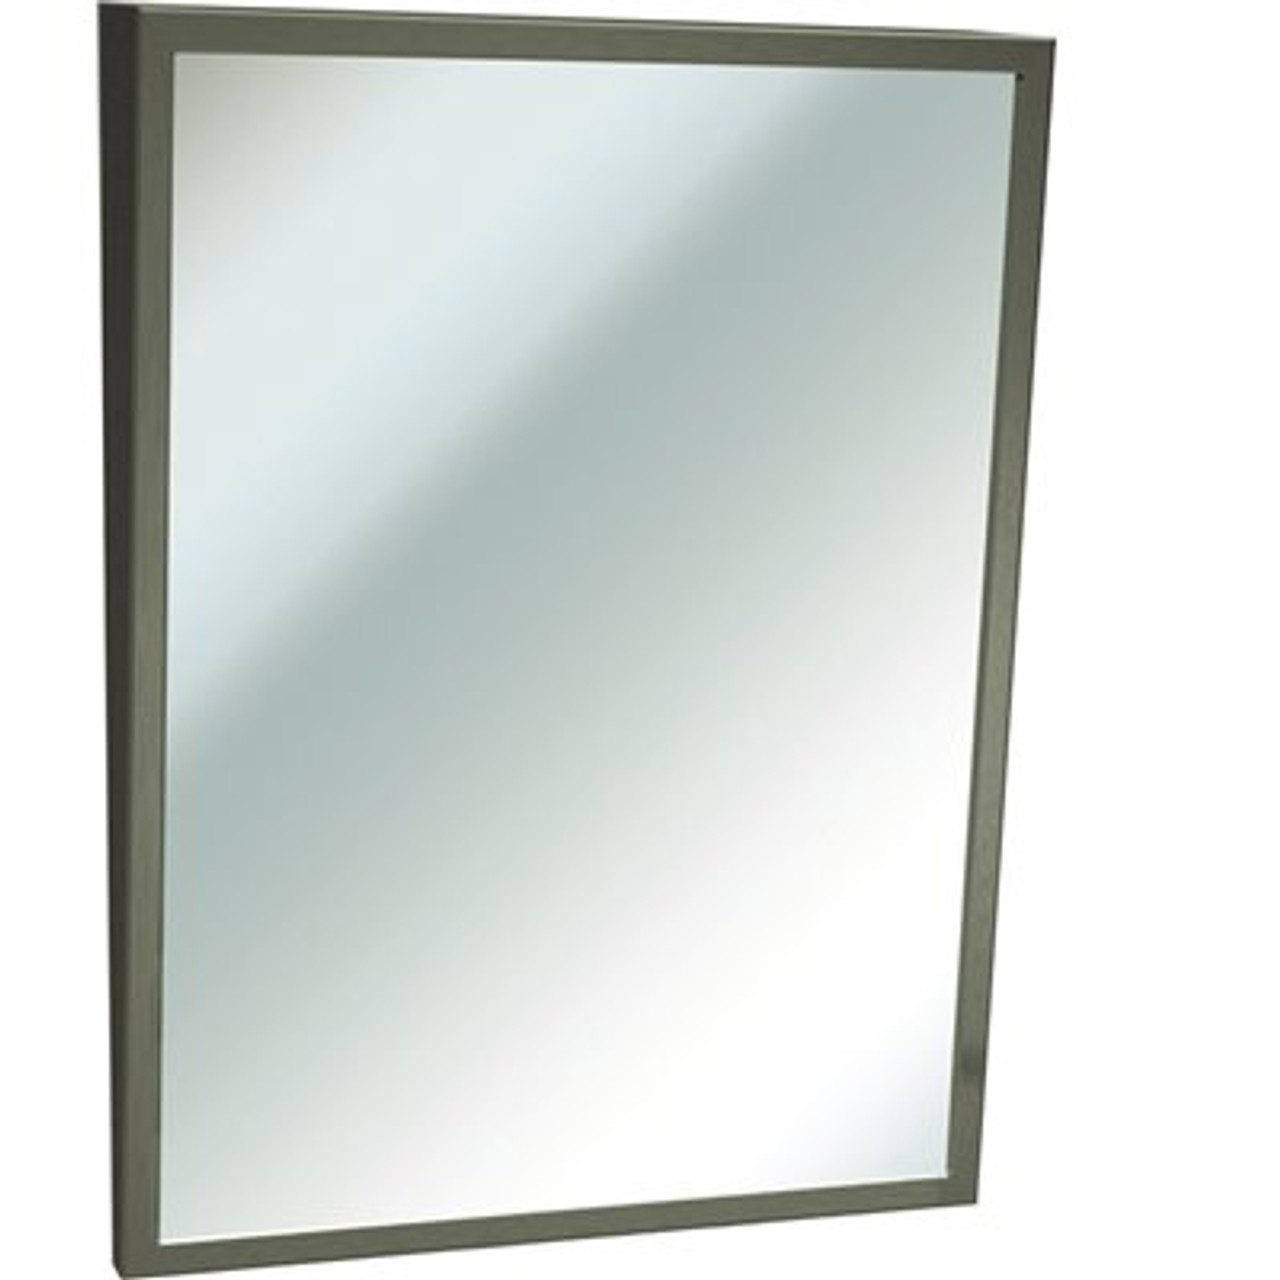 ASI 18 in. W x 36 in. H Rectangular Framed Fixed Tilt Wall Mount Bathroom Vanity Mirror in Stainless Steel